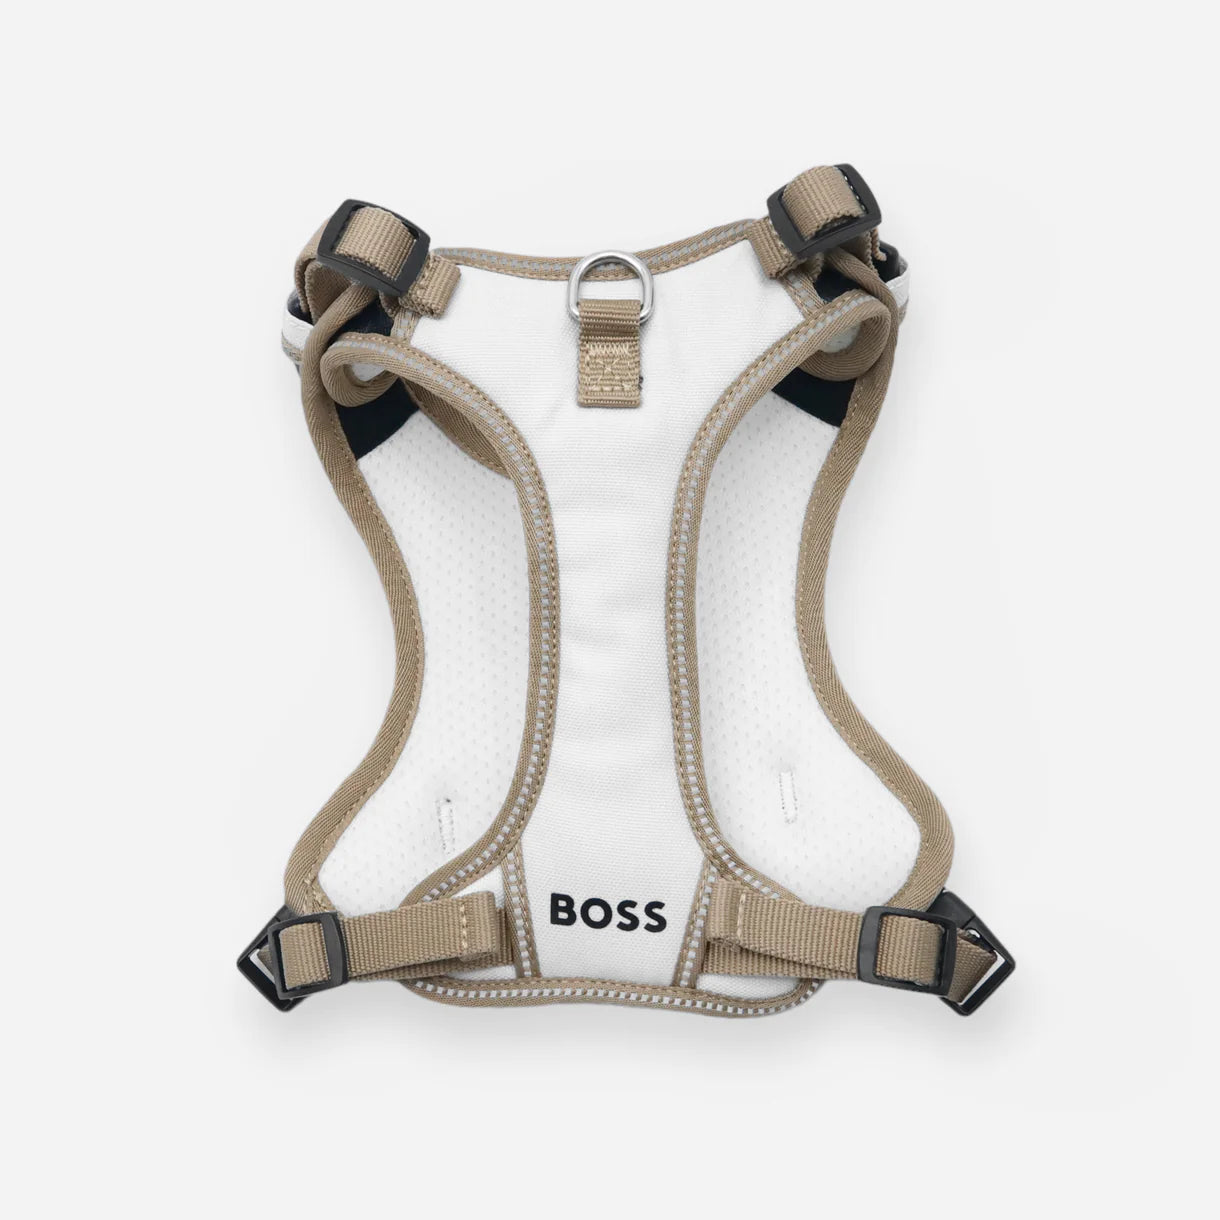 The BOSS Harness